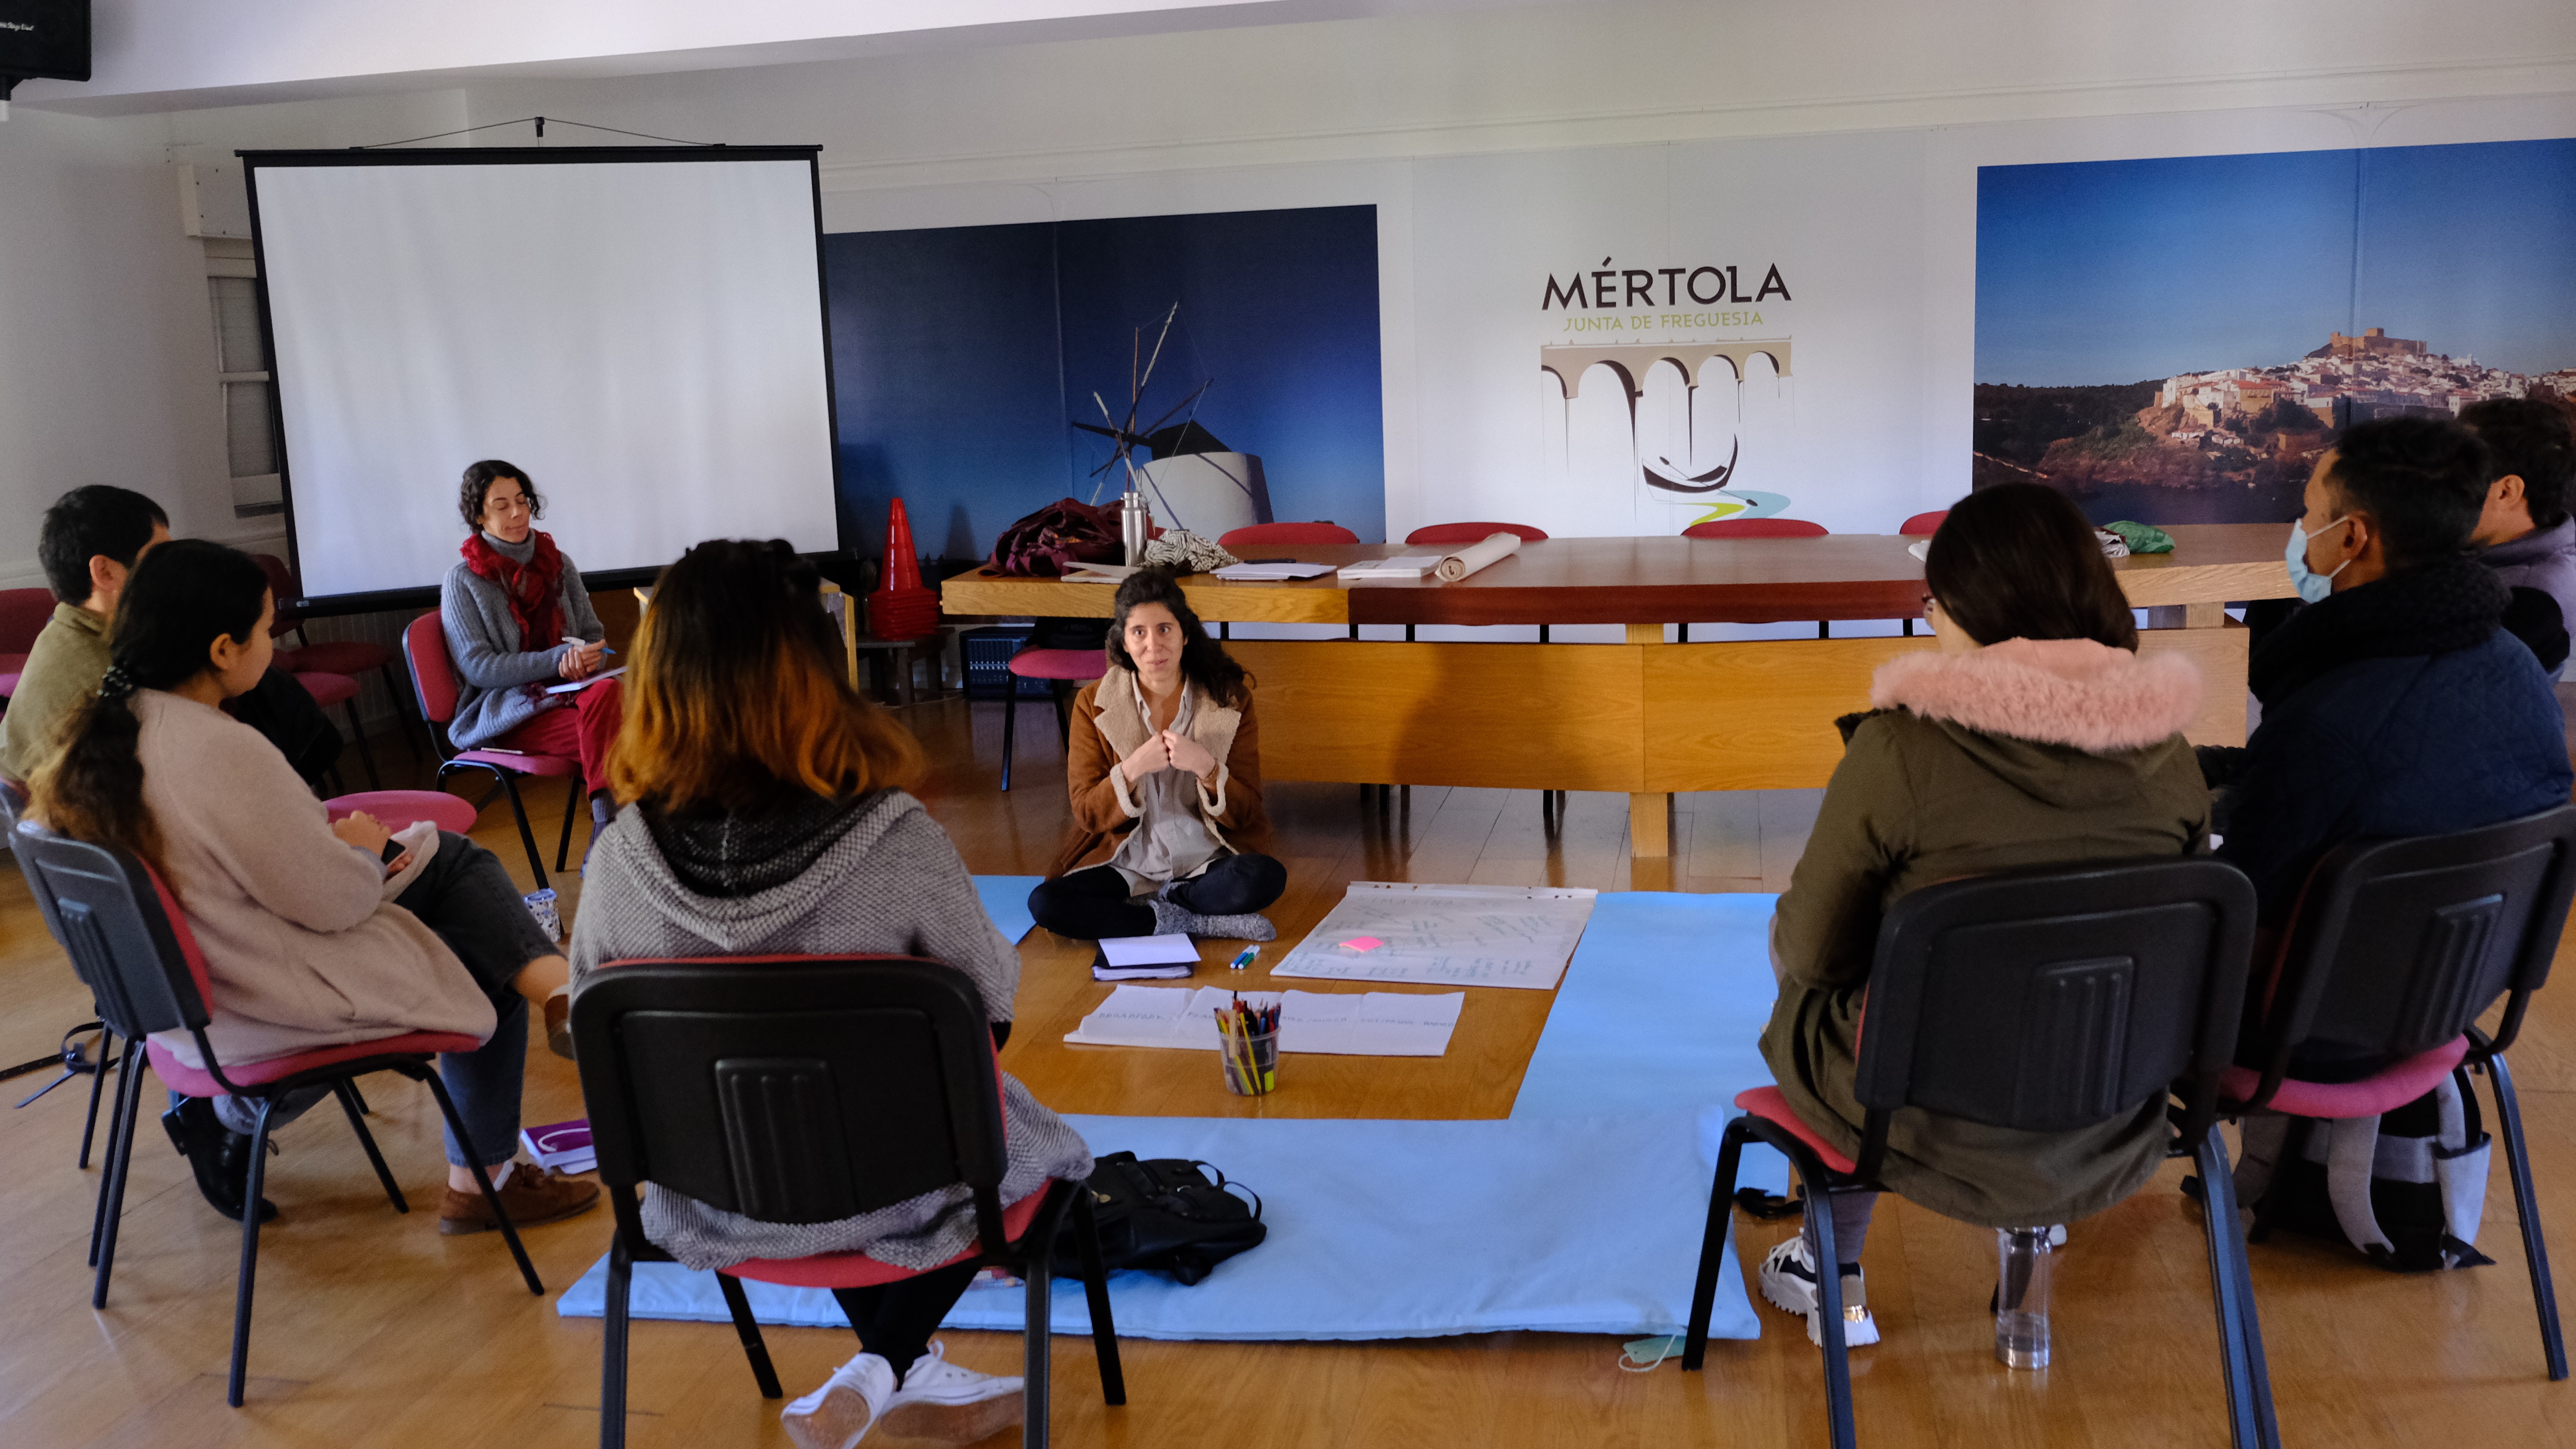 Terra de Abrigo meeting in Mertola, Portugal (image: Marta Vidal)